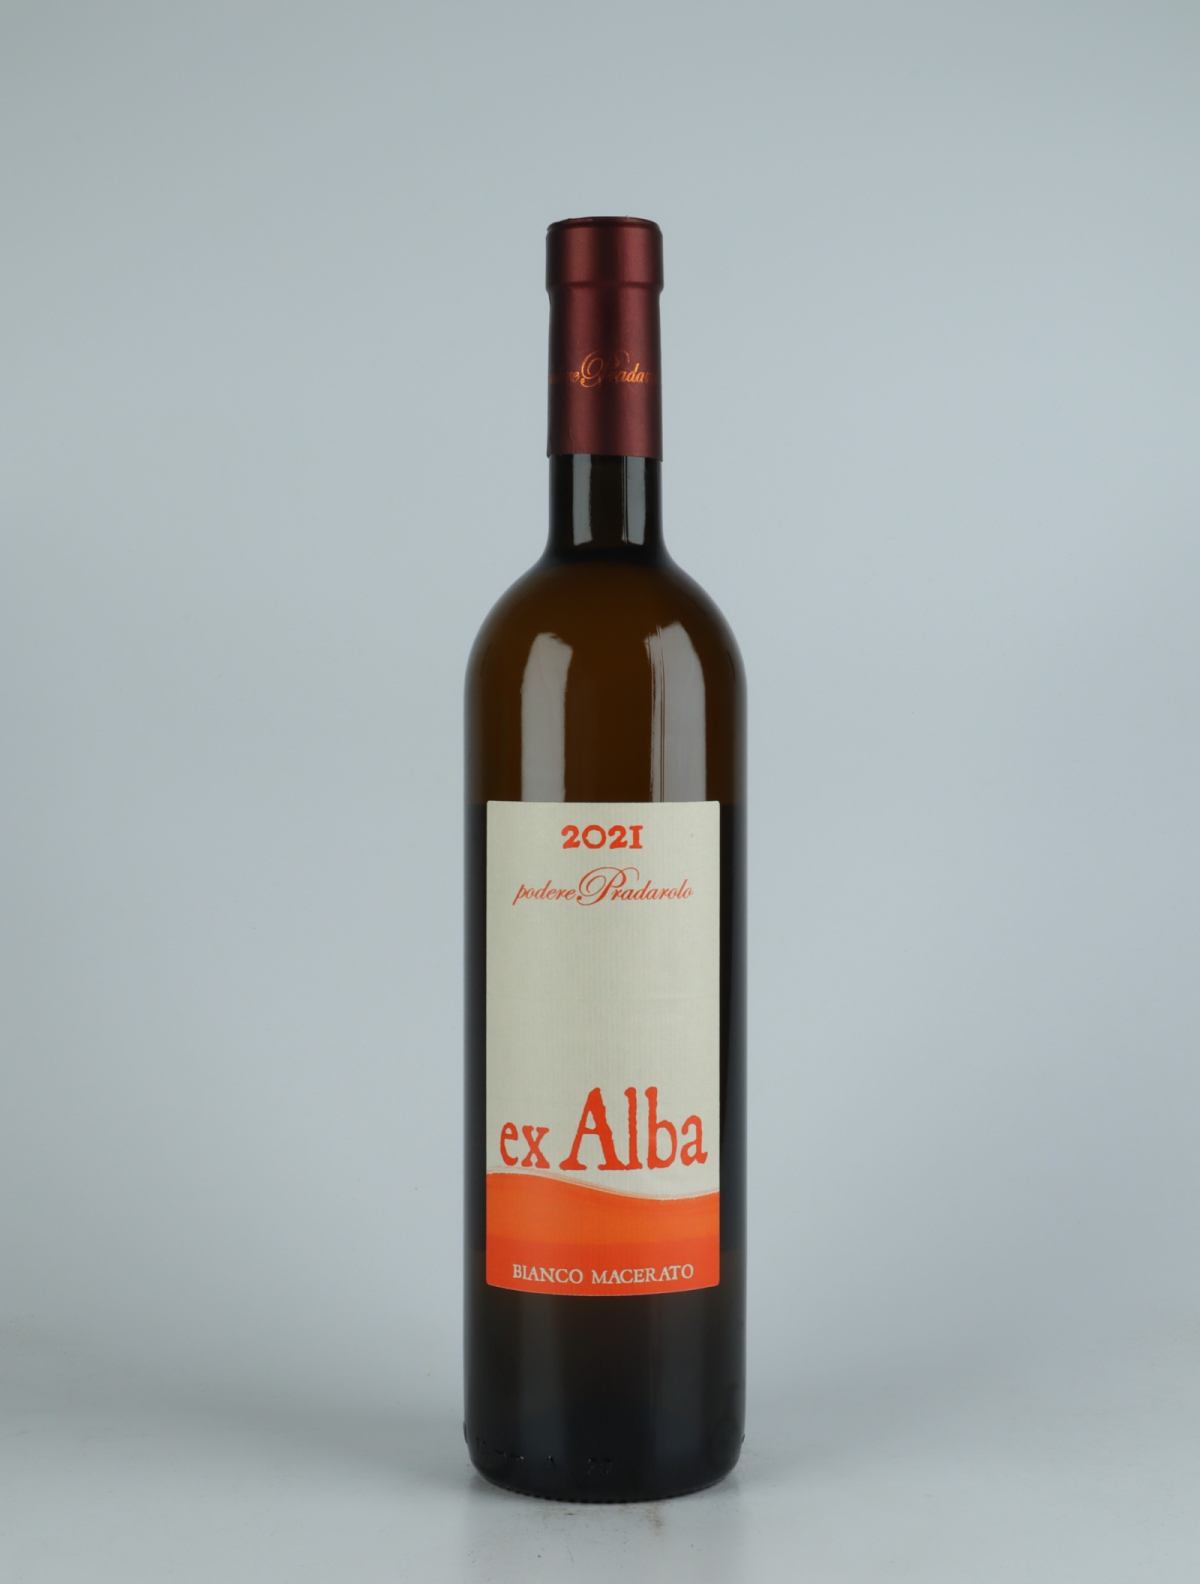 A bottle 2021 Ex Alba Orange wine from Podere Pradarolo, Emilia-Romagna in Italy